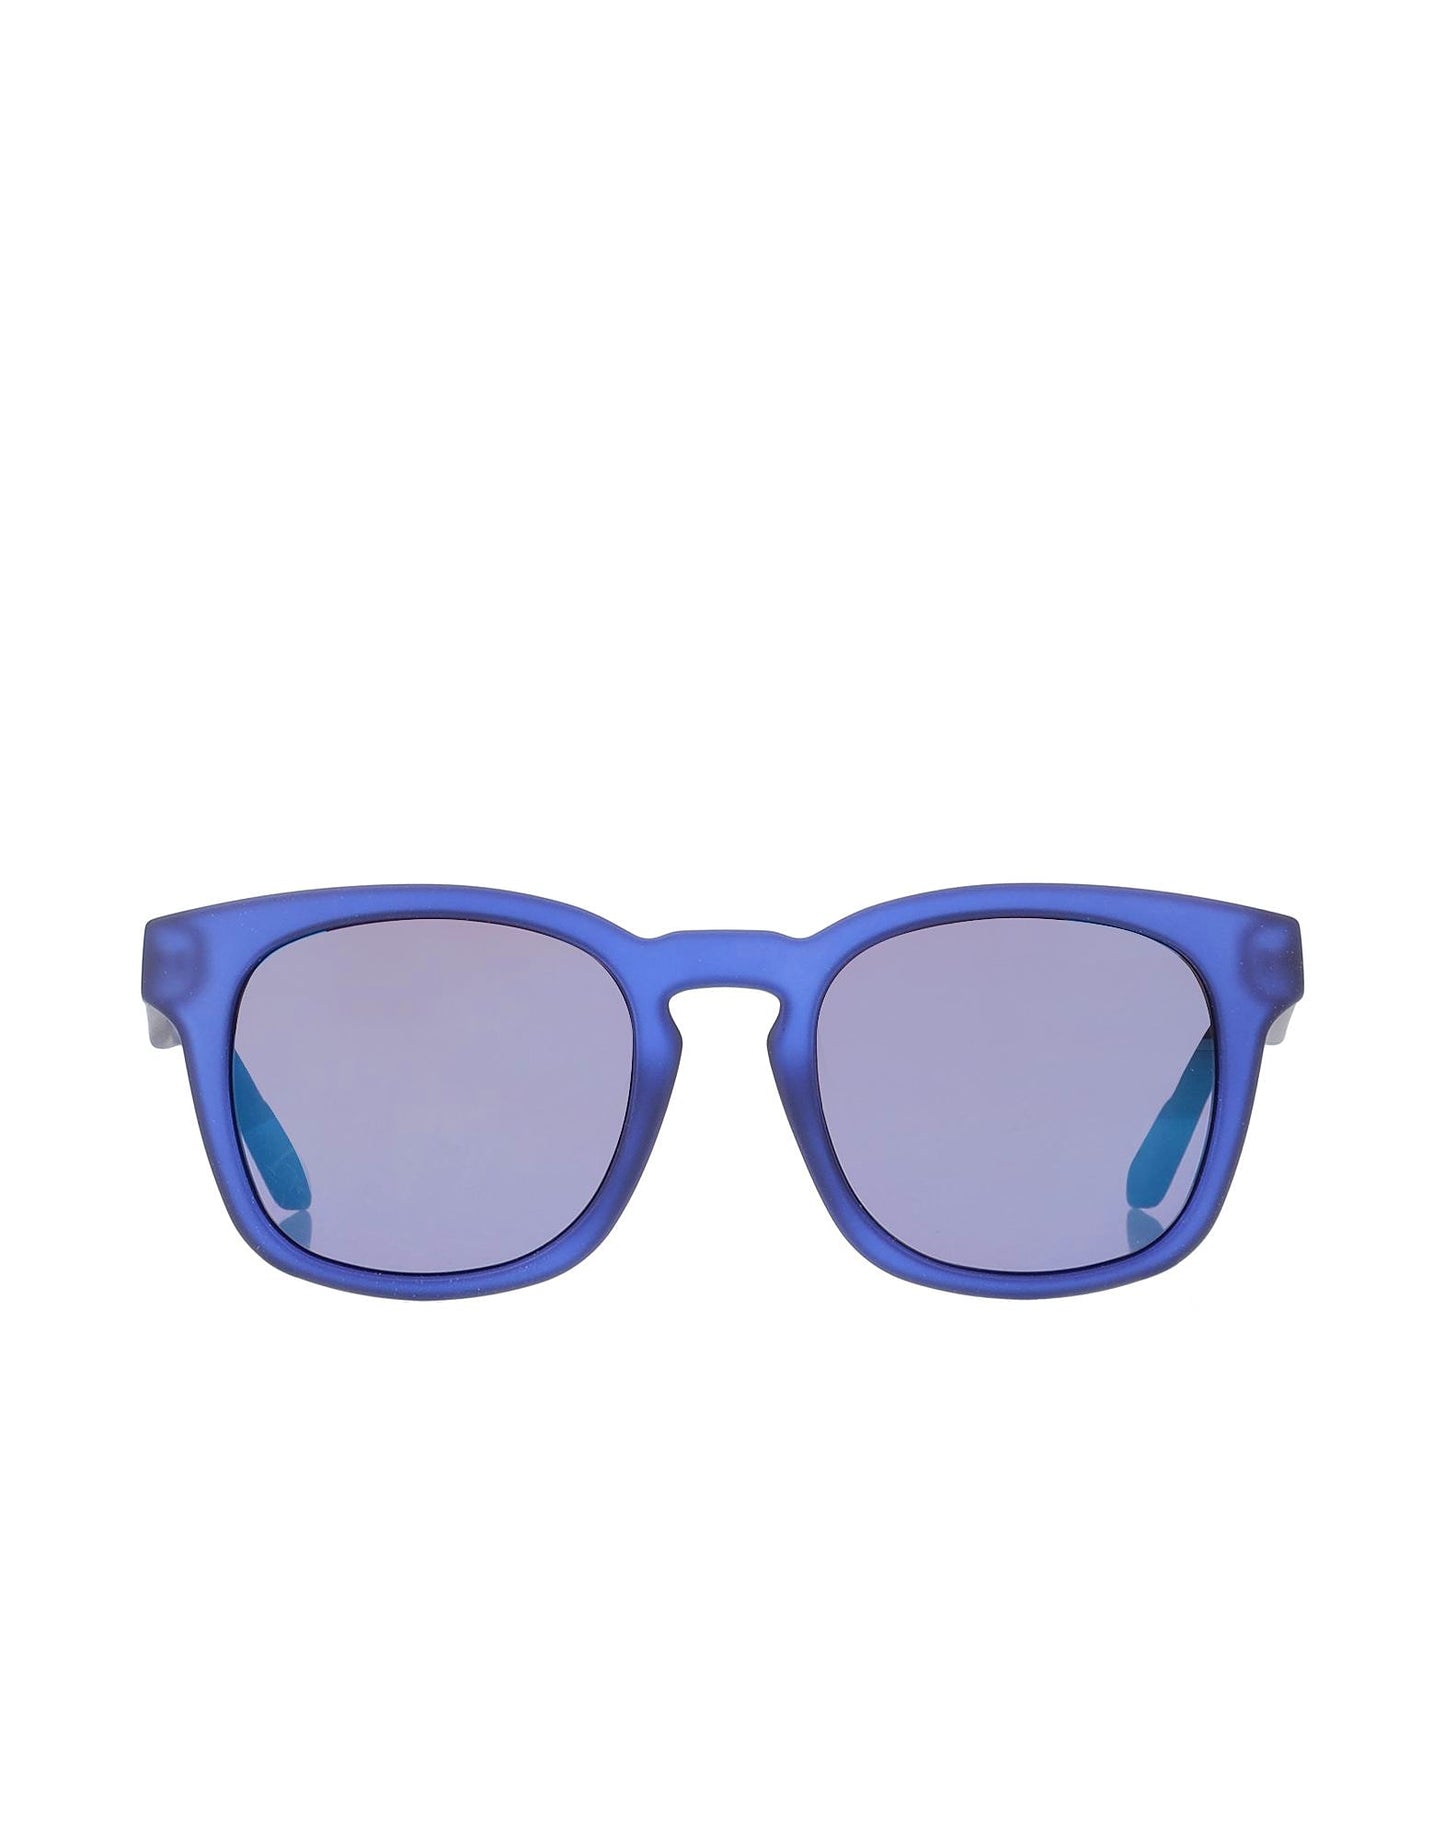 GUCCI Sunglasses - DARK BLUE 52 mm